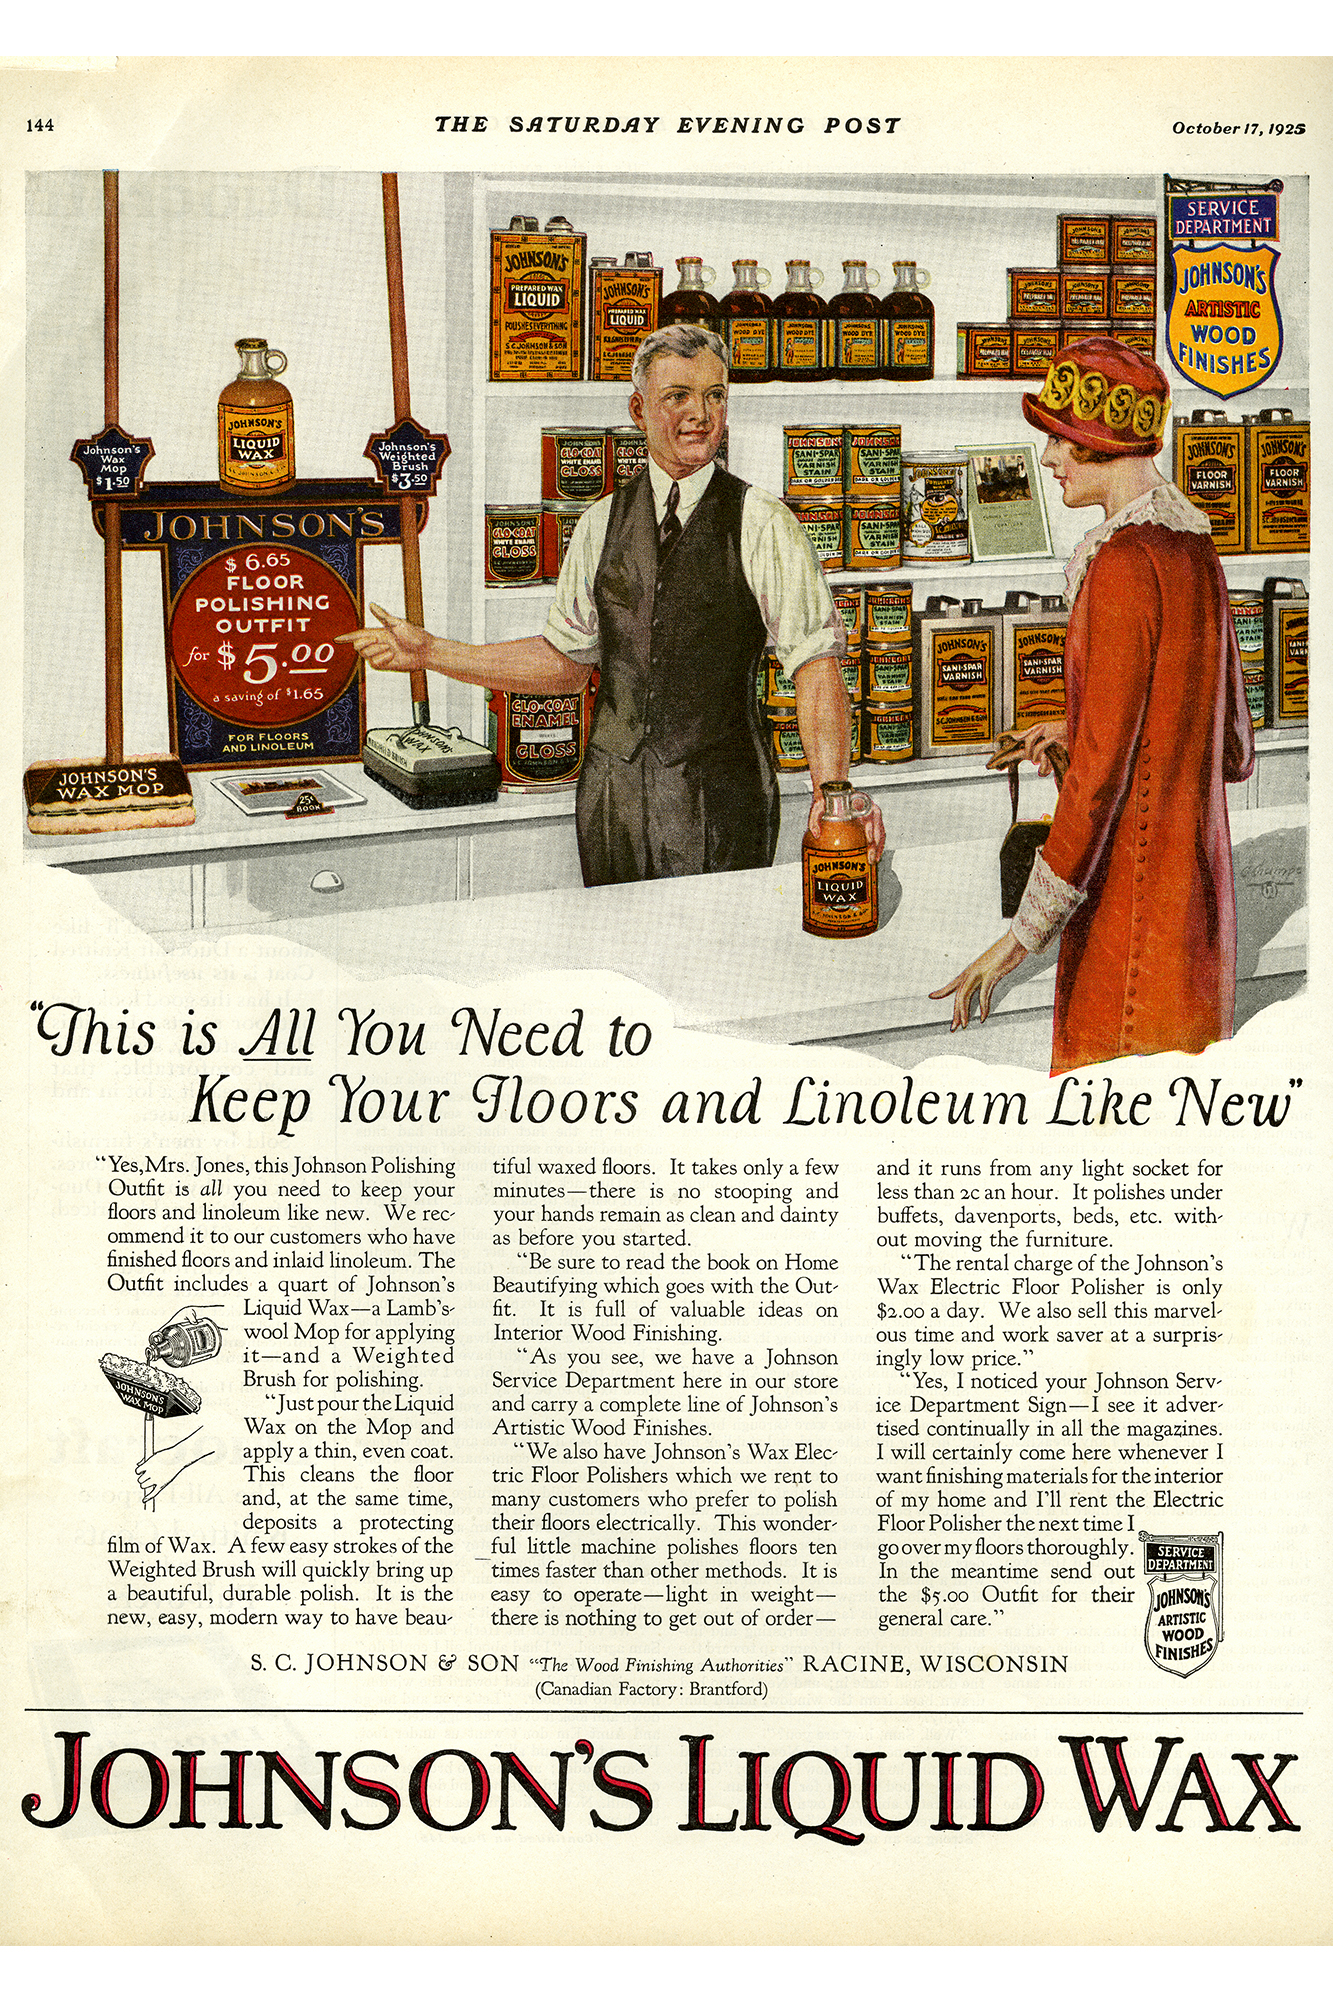 Propaganda vintage de 1925 da cera de polimento líquida da Johnson